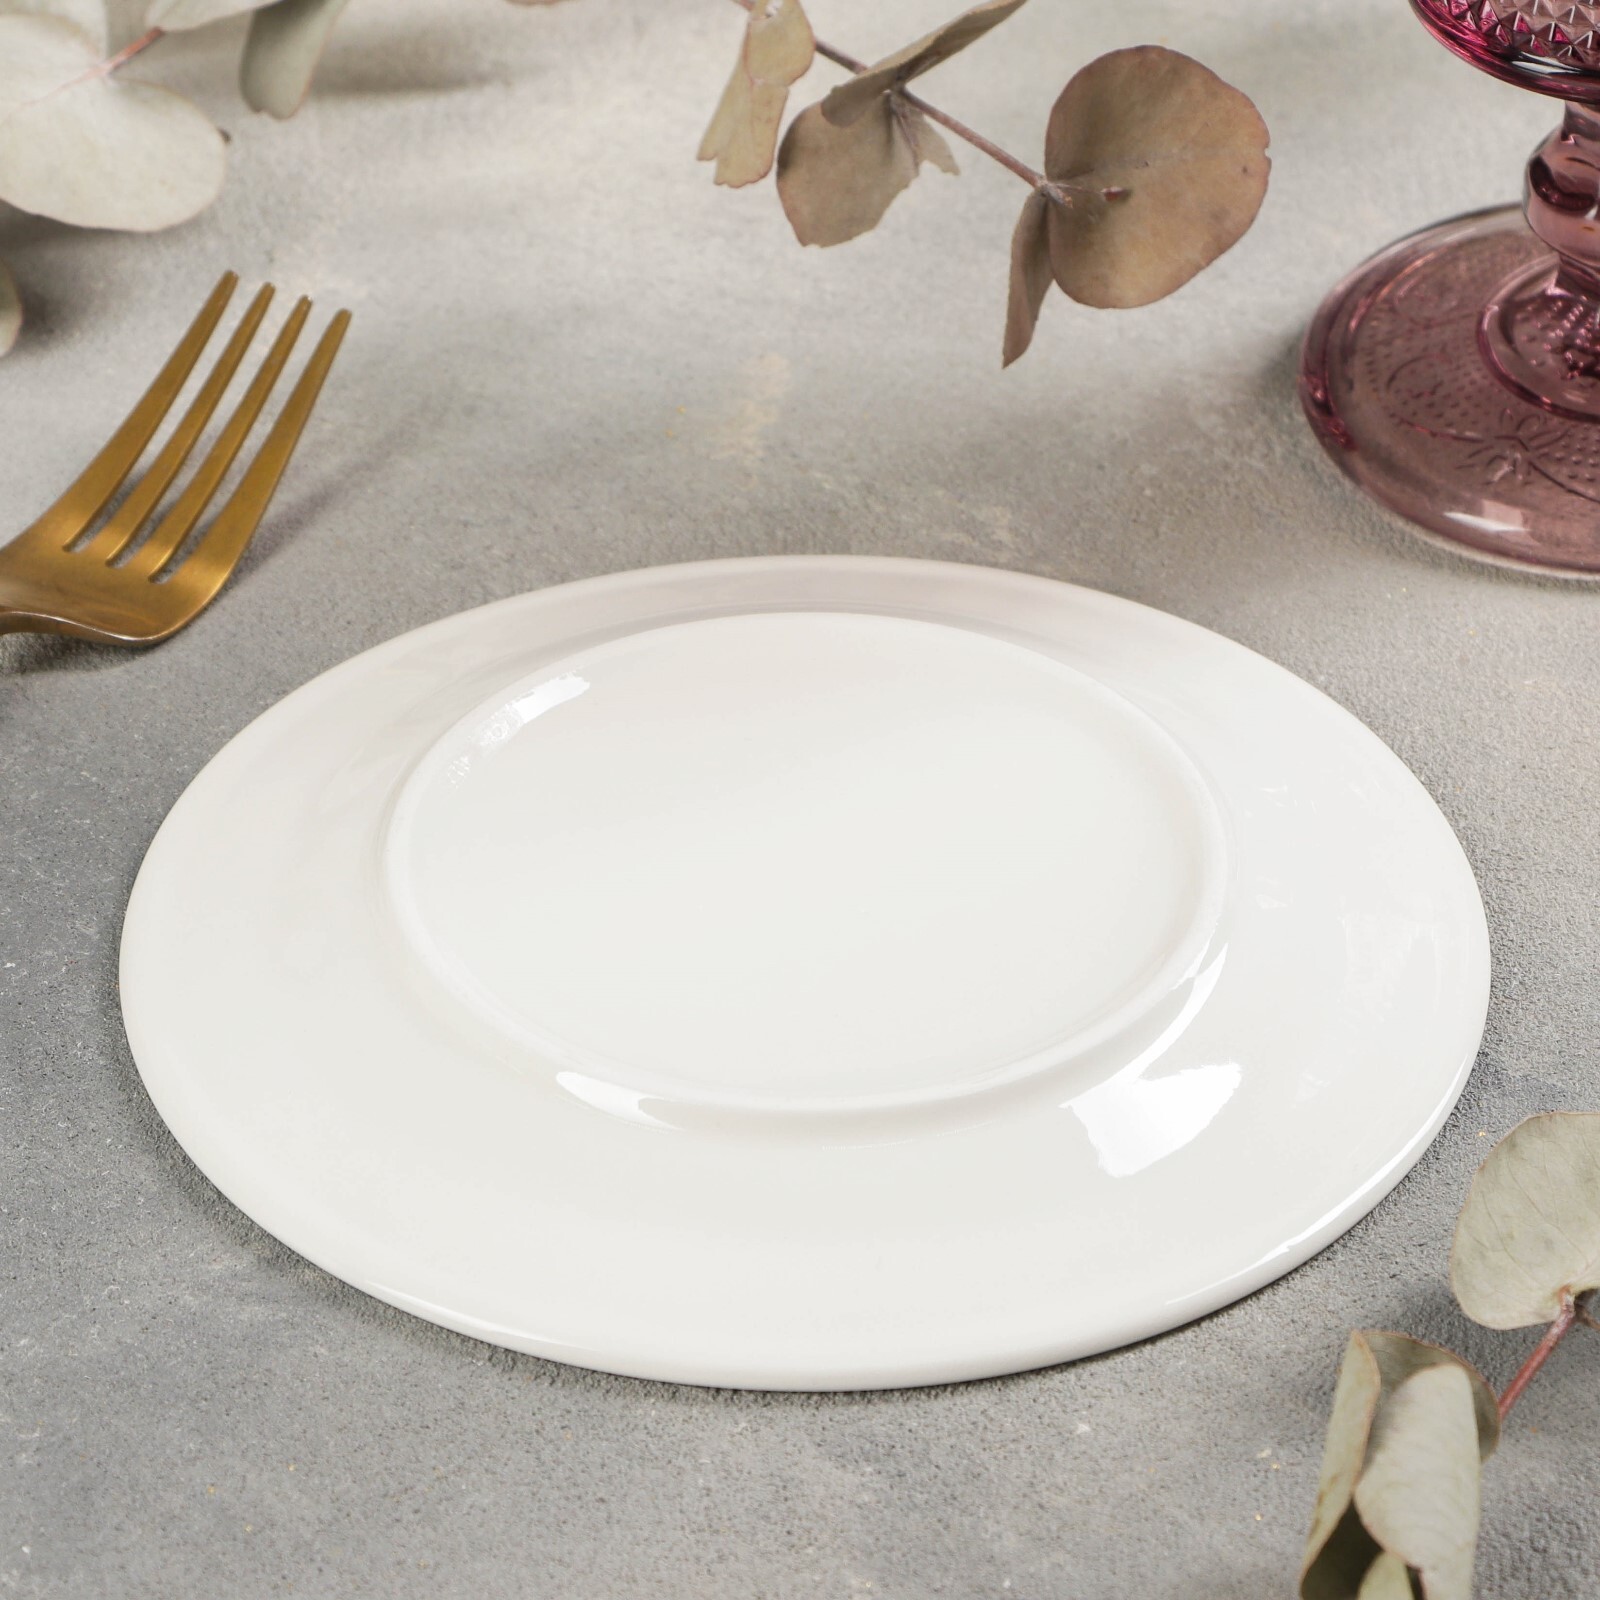 Тарелка обеденная фарфор. Тарелка обеденная 25см Basic White опал po250vwb. Тарелка десертная White Label, d=17,5 см, цвет белый. Тарелка пирожковая d15см. Тарелка обеденная Symphony 25см.